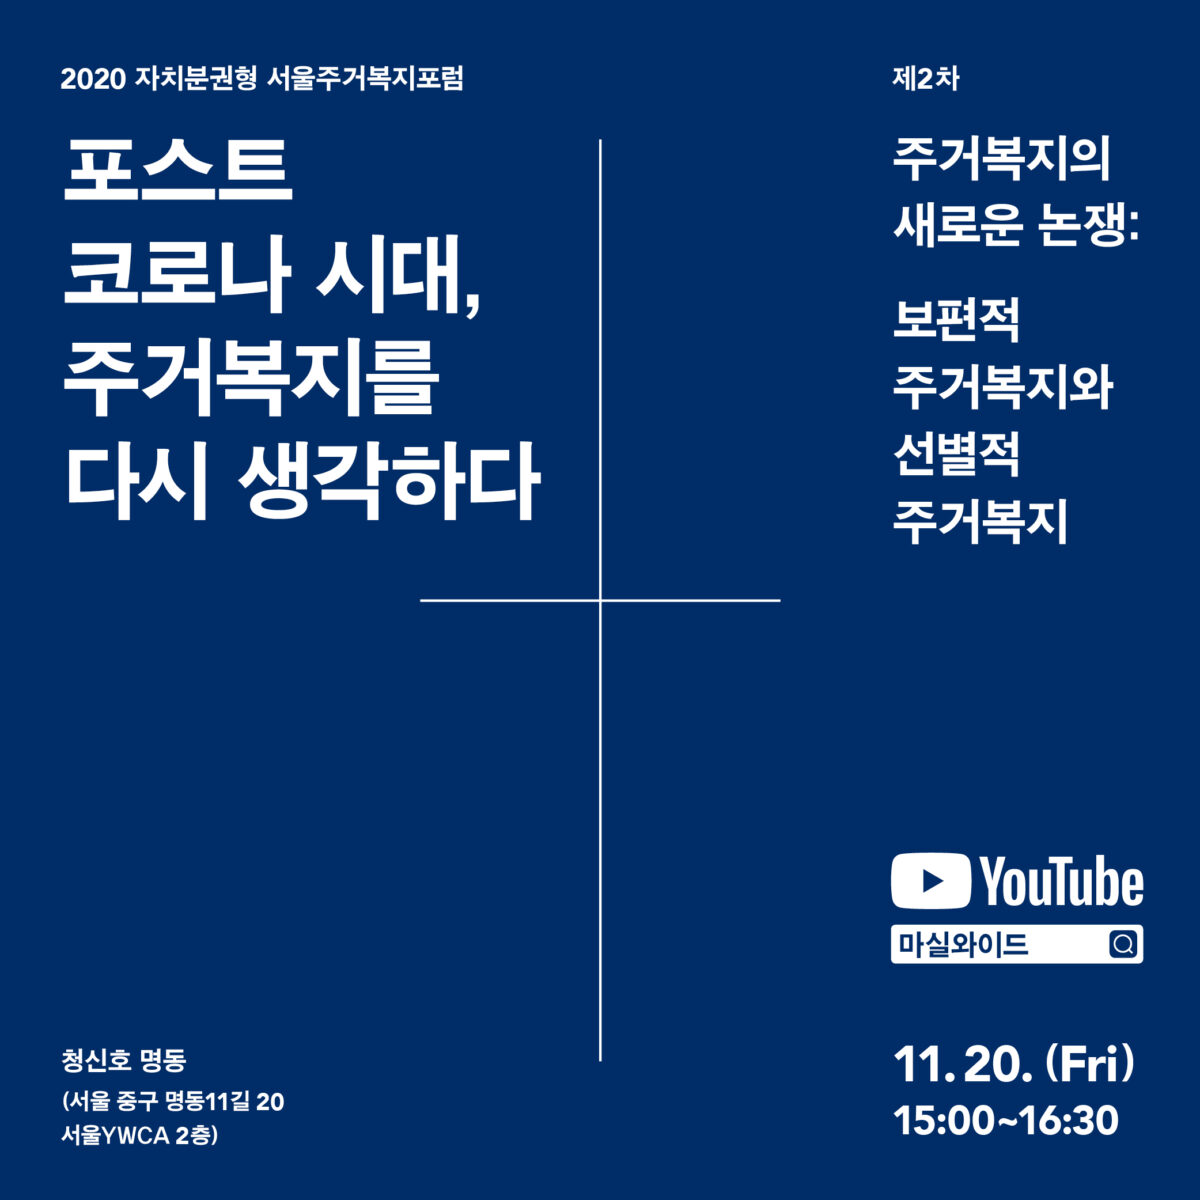 You are currently viewing [2020 서울주거복지포럼] 2차 행사 홍보 및 참가요청(11/20)